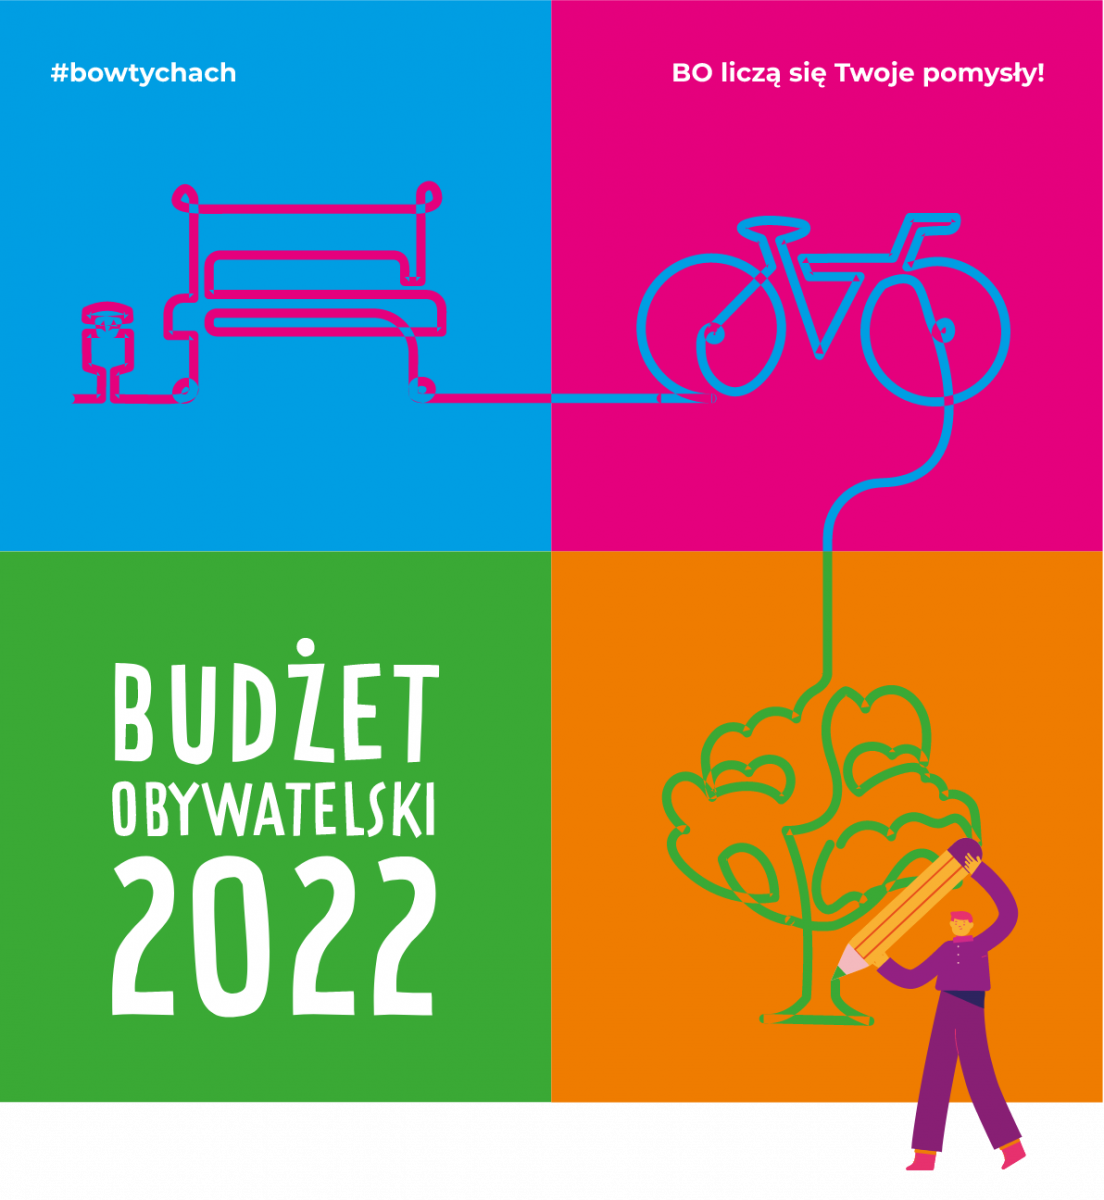 Grafika promująca budżet obywatelski 2022